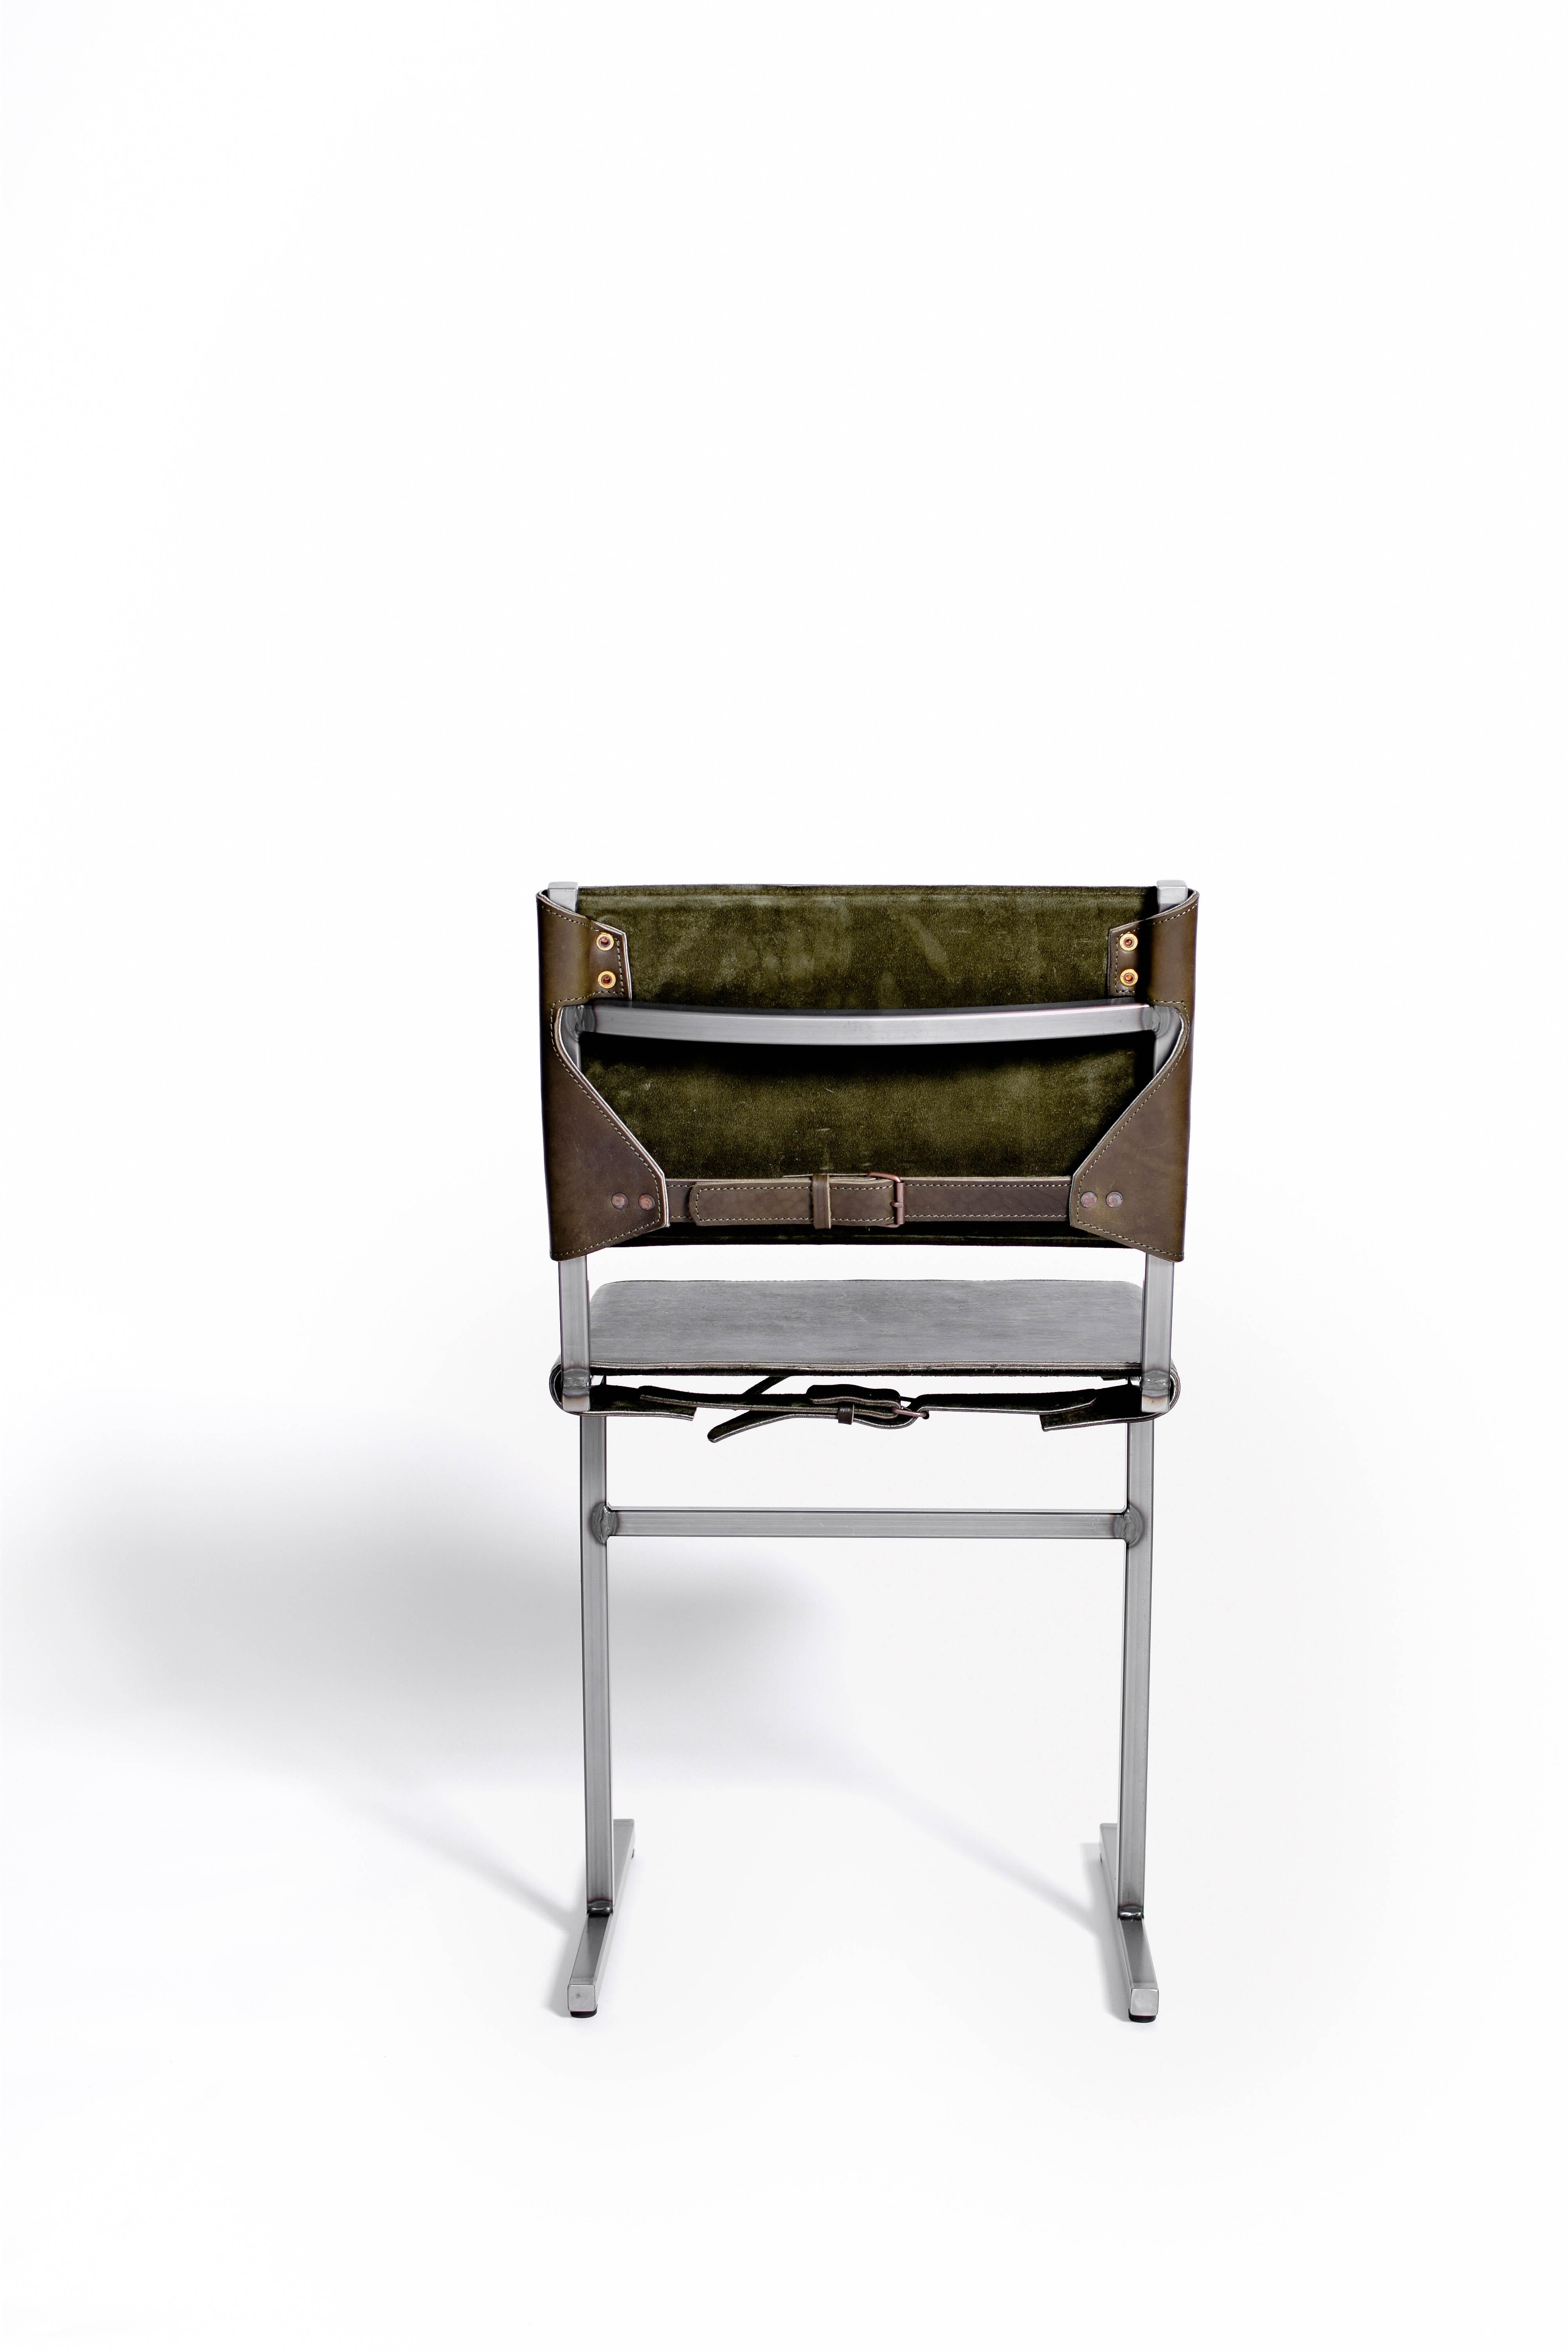 Dutch Moss Green Memento Chair, Jesse Sanderson